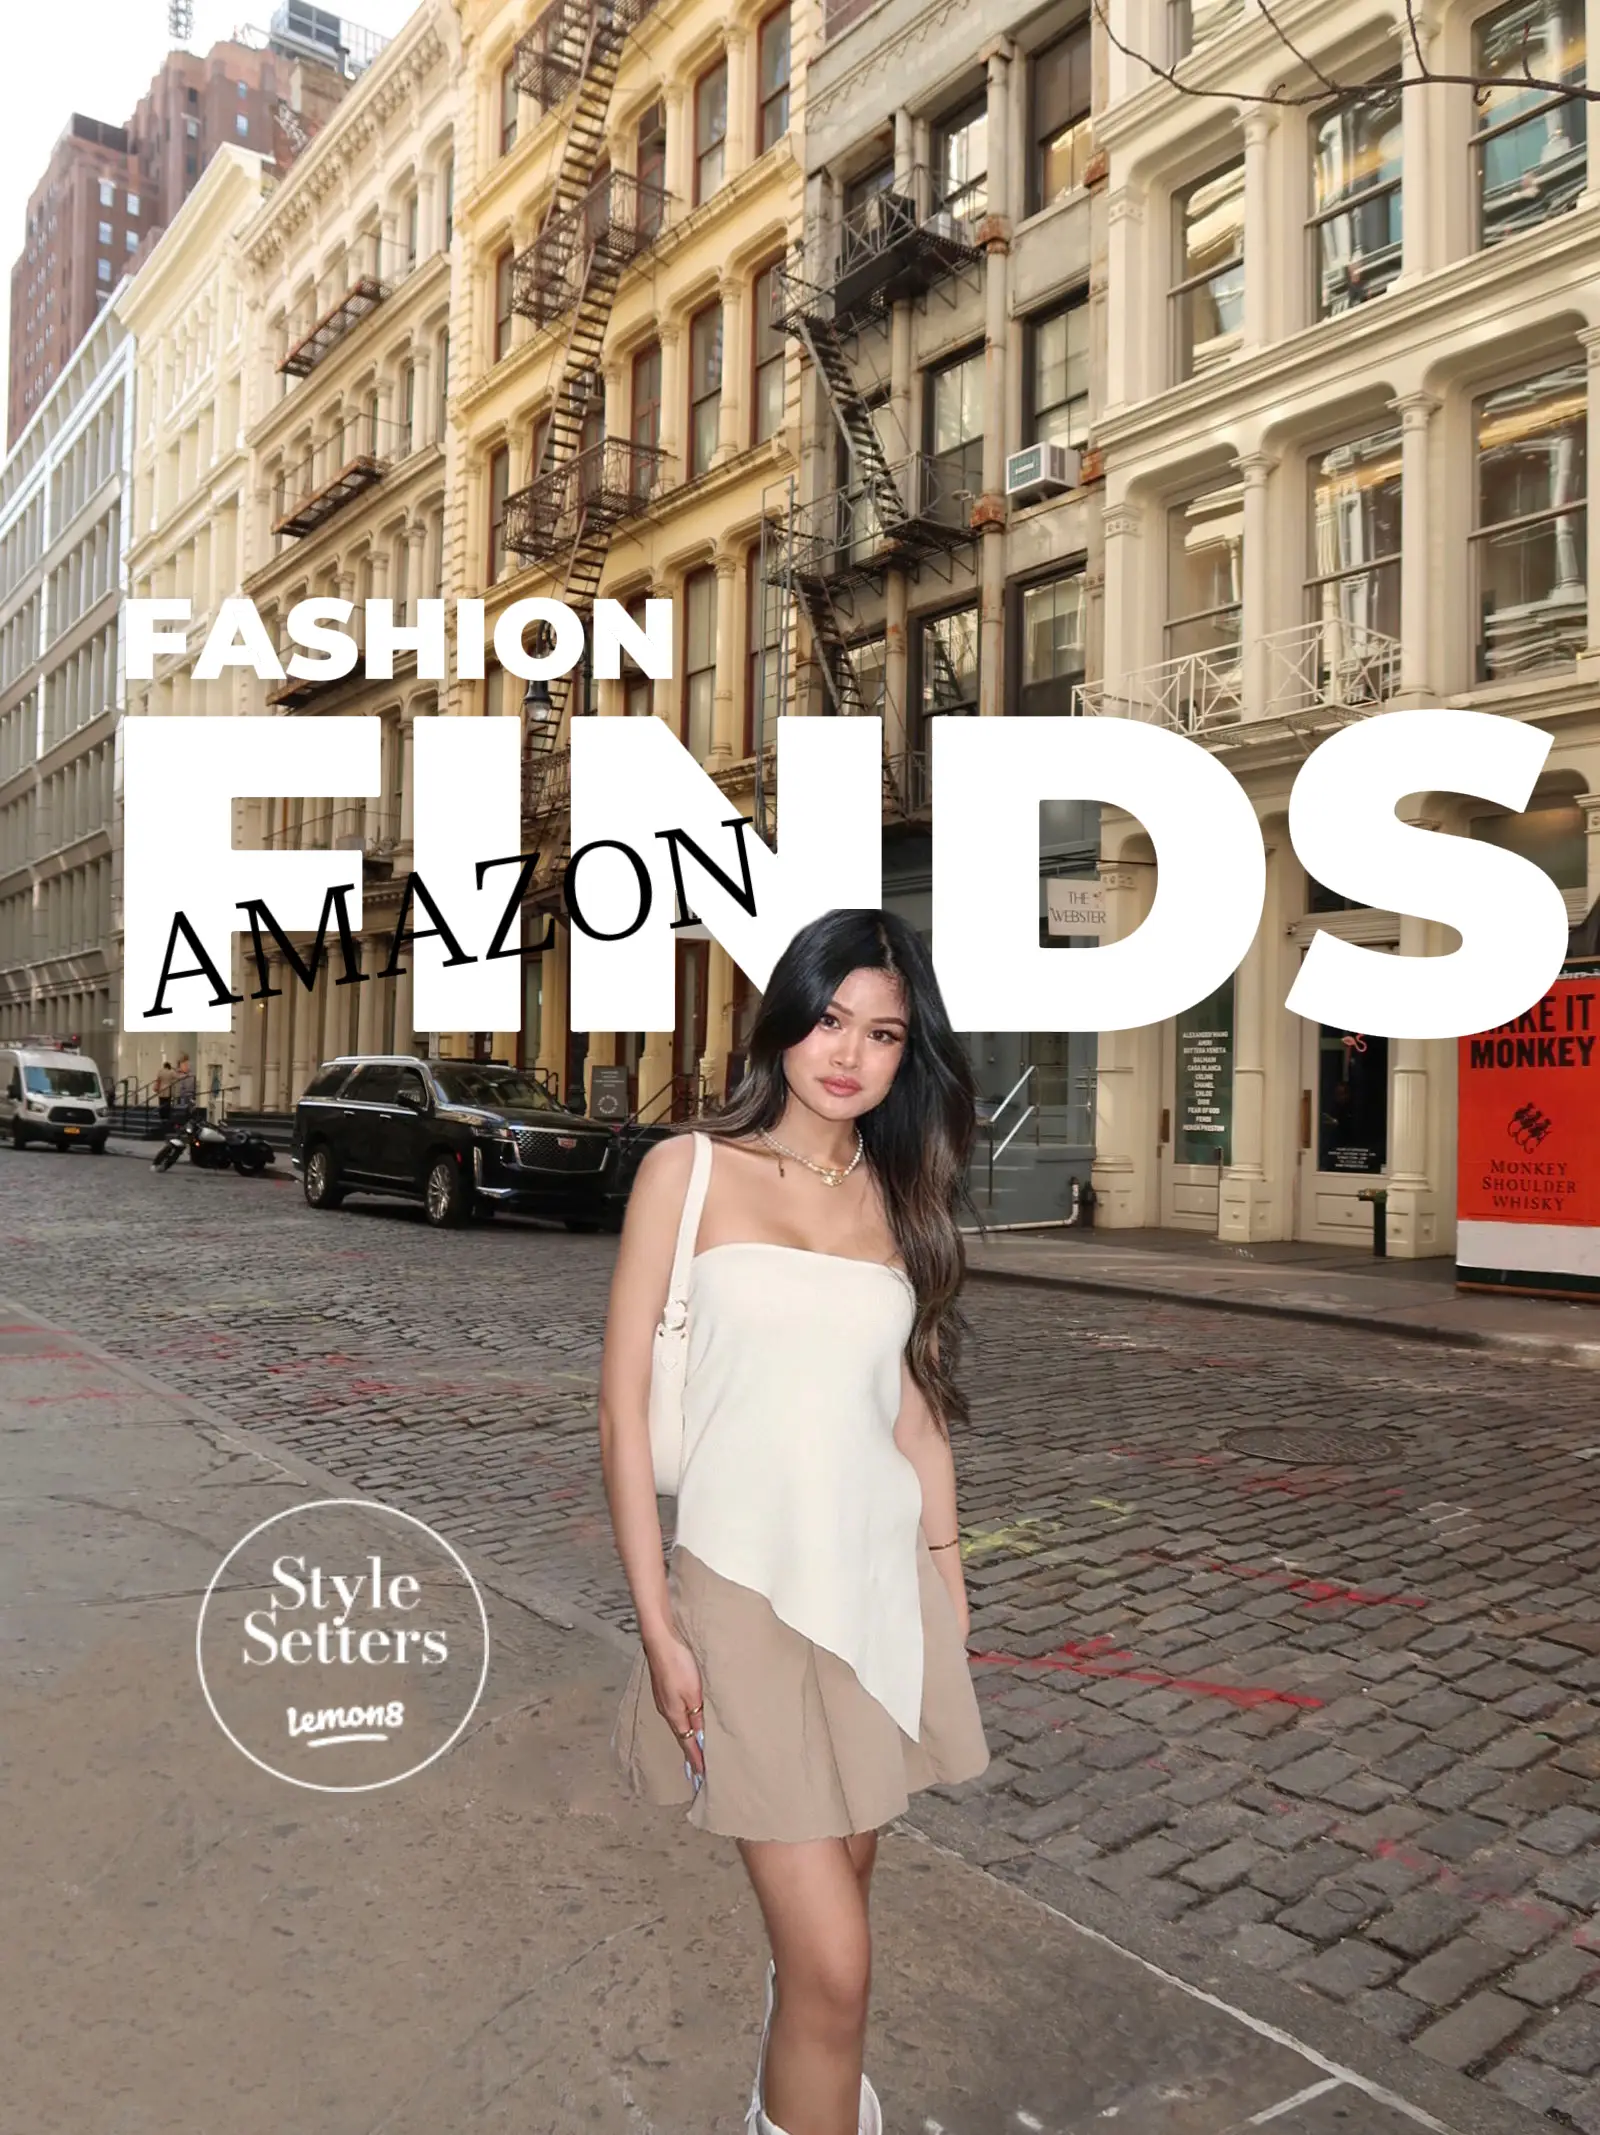 Fashion 3Pc Sexy Lace Silk Quality Seamless Biker Shorts Underwear(Size 8-14)  @ Best Price Online